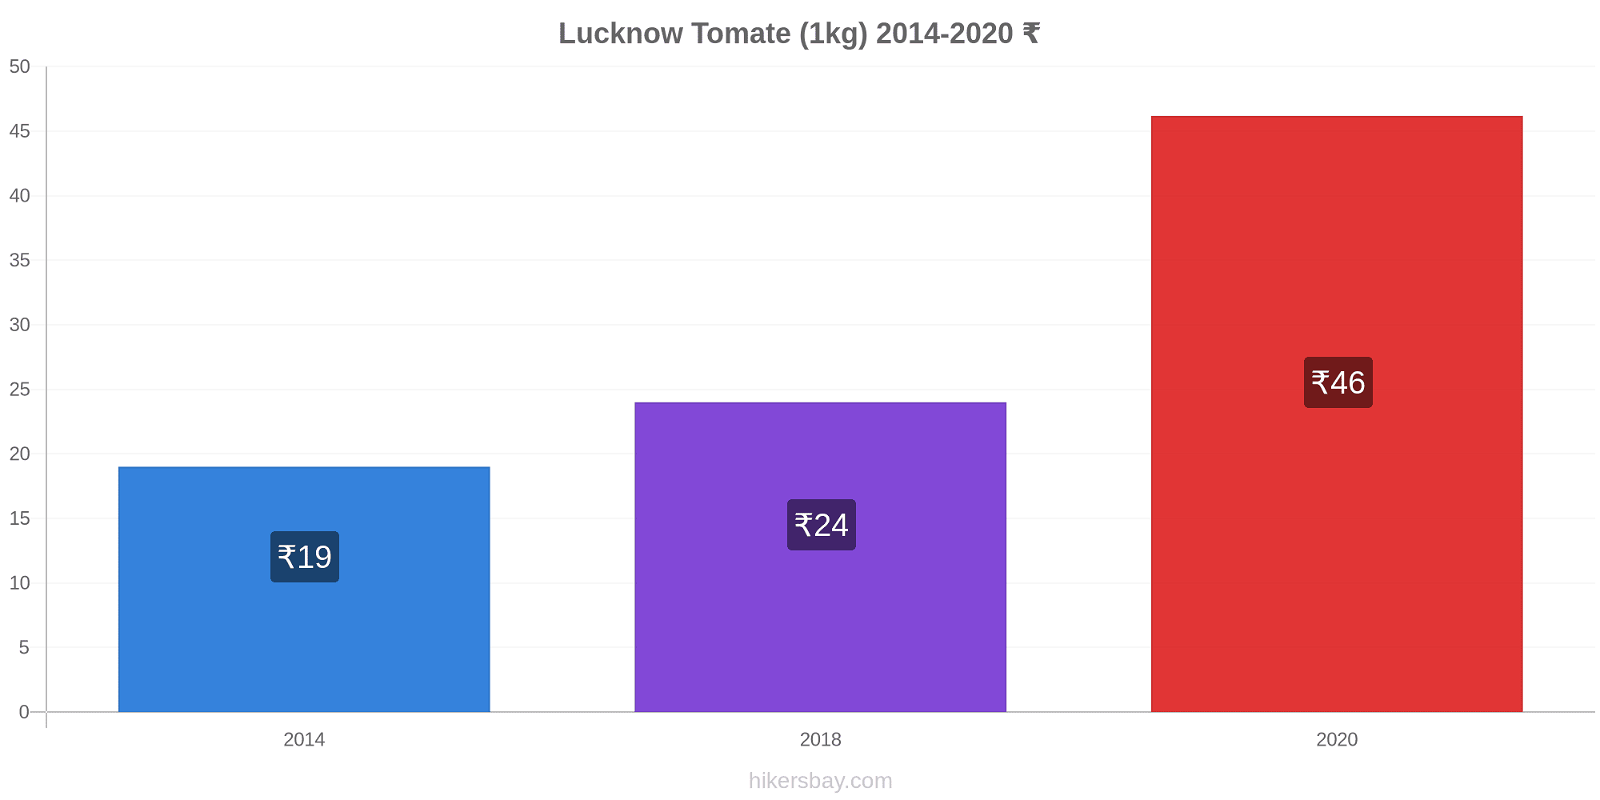 Lucknow changements de prix Tomate (1kg) hikersbay.com